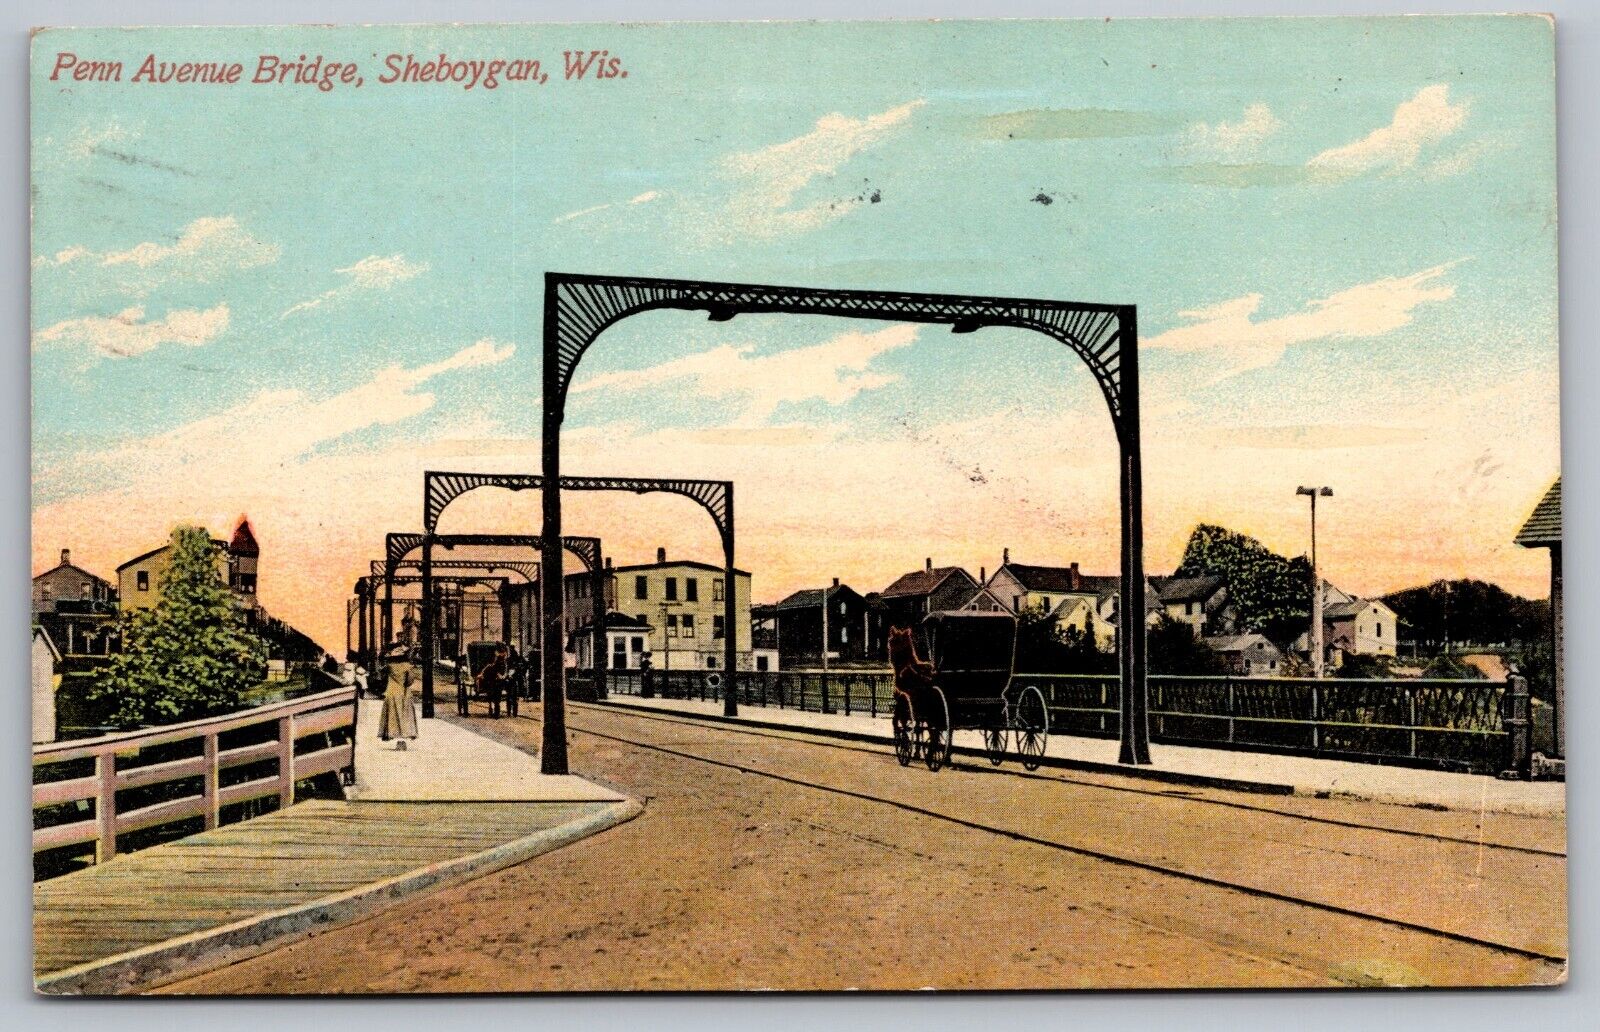 Penn Avenue Bridge Sheboygan Wisconsin w/ Horses and Buggies-c1912 VTG Postcard